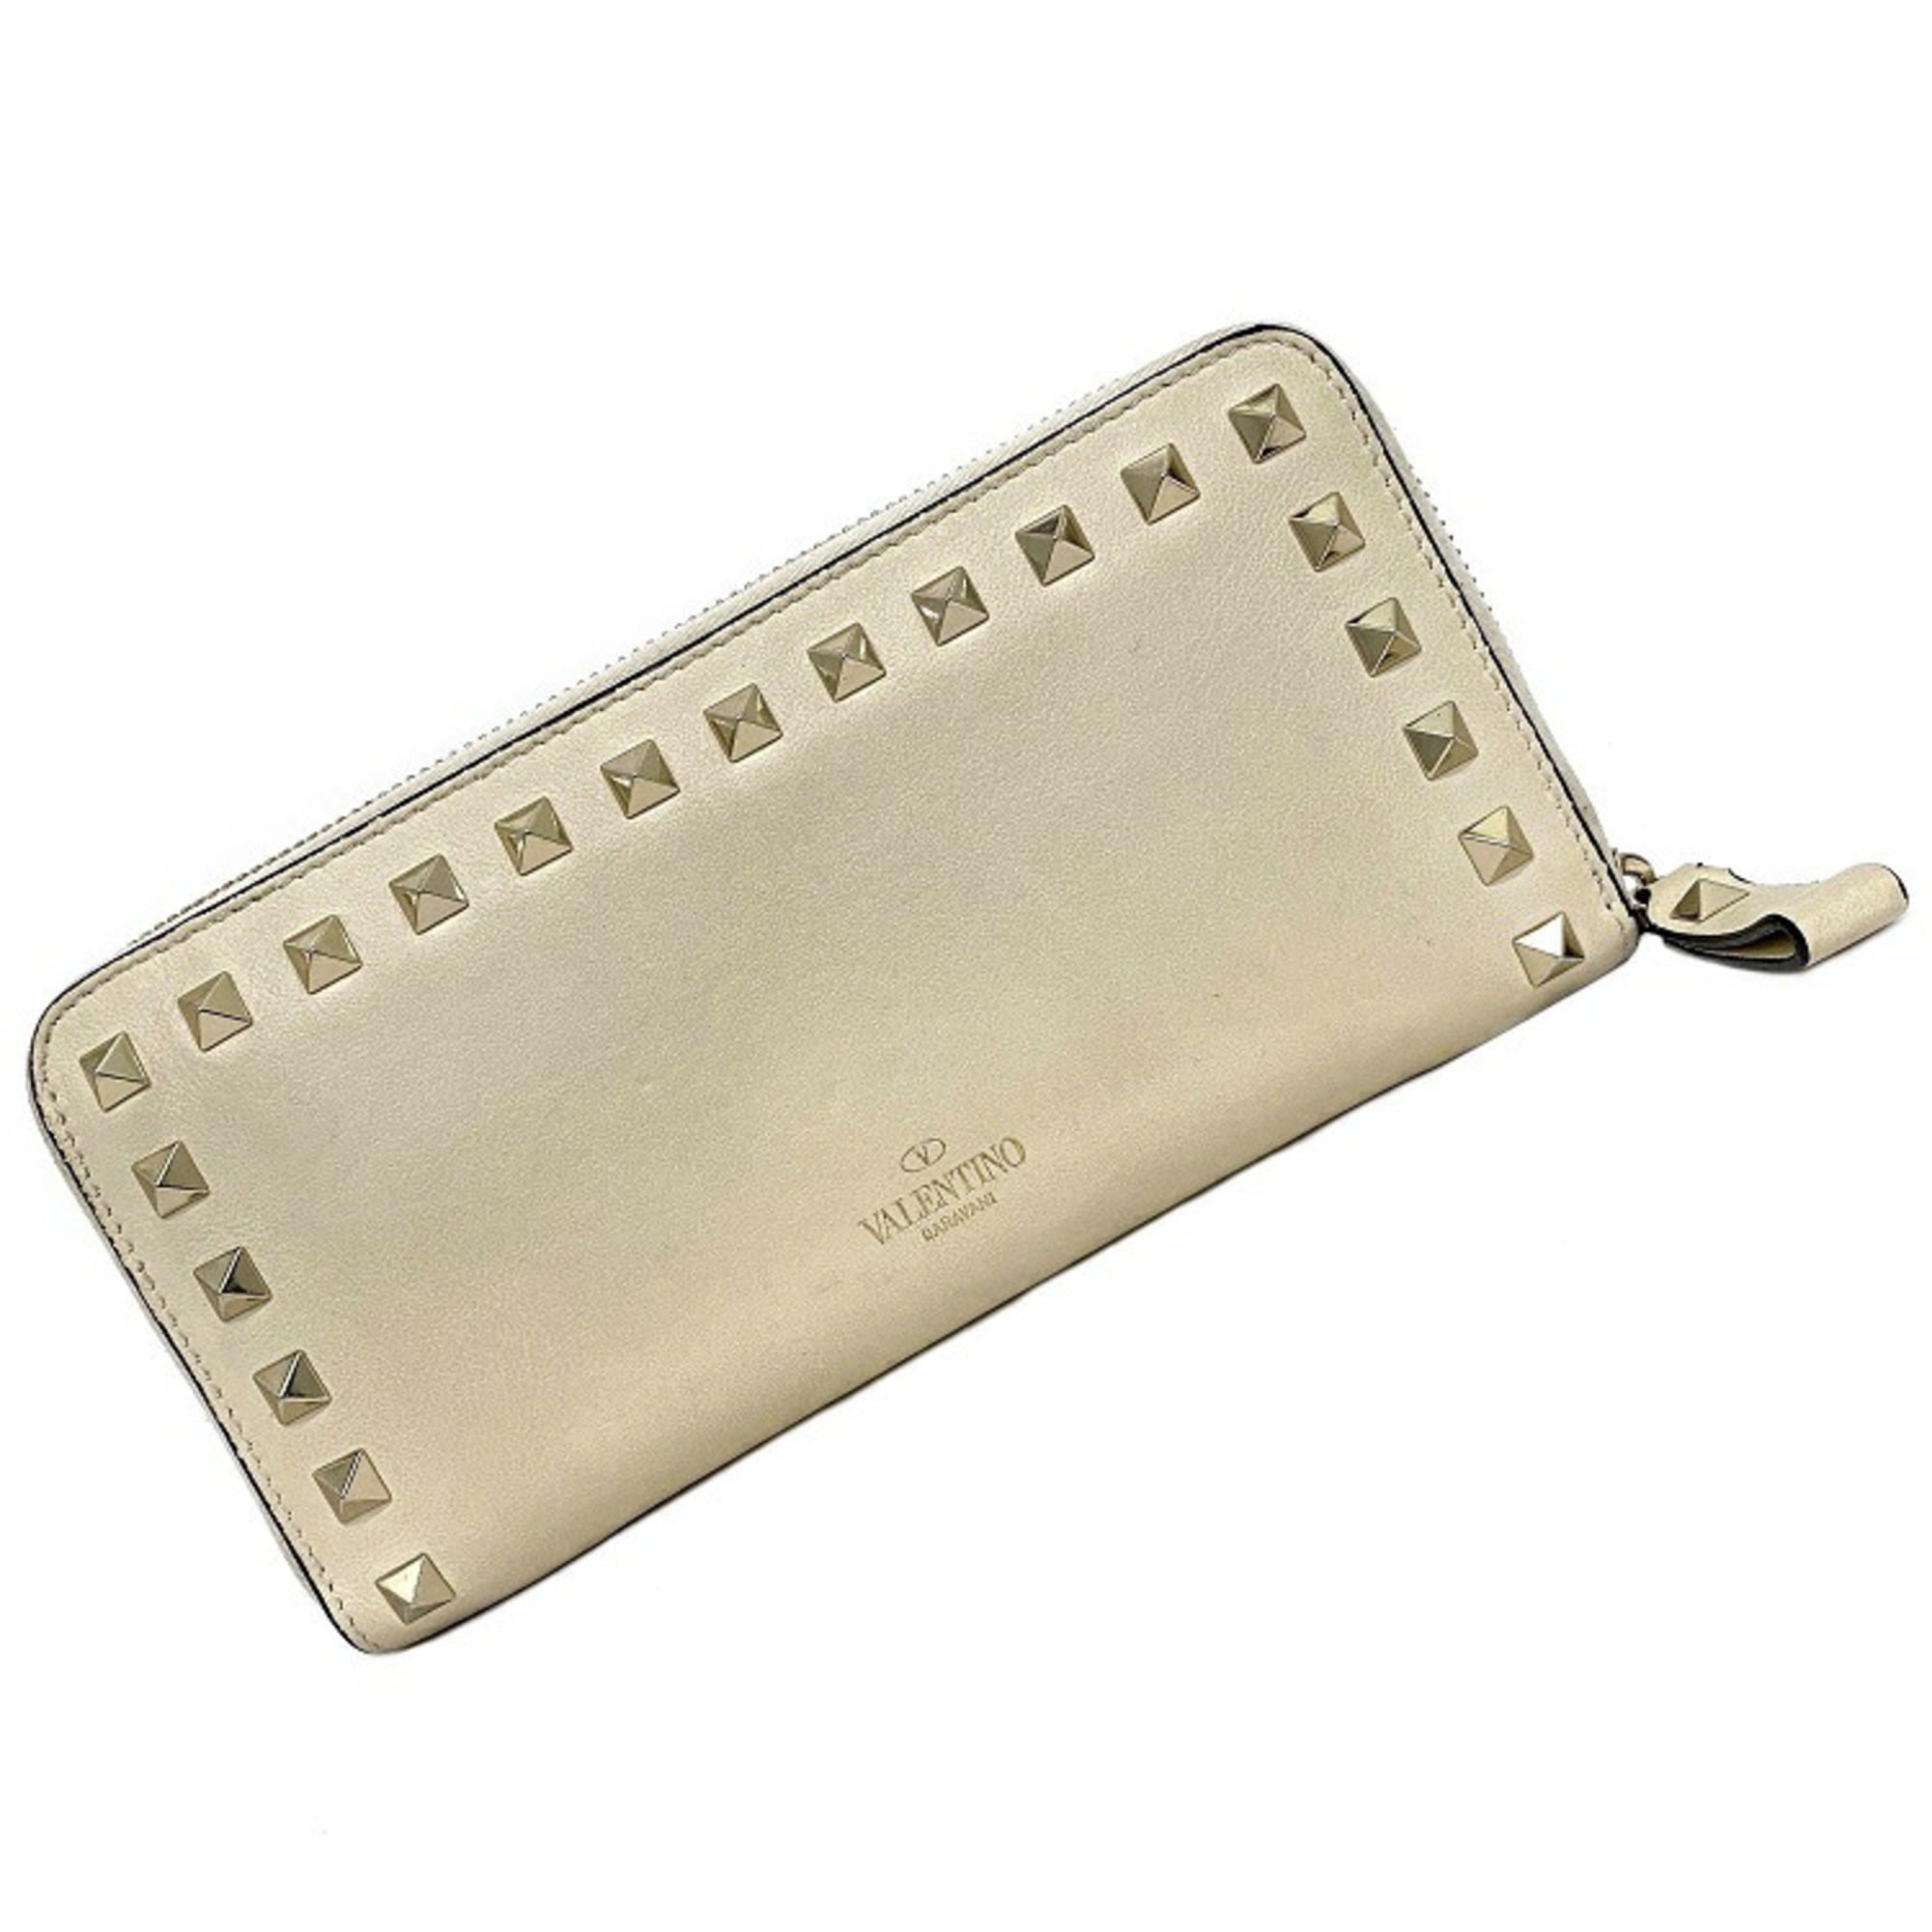 Valentino Garavani - Authenticated Handbag - Leather White for Women, Good Condition